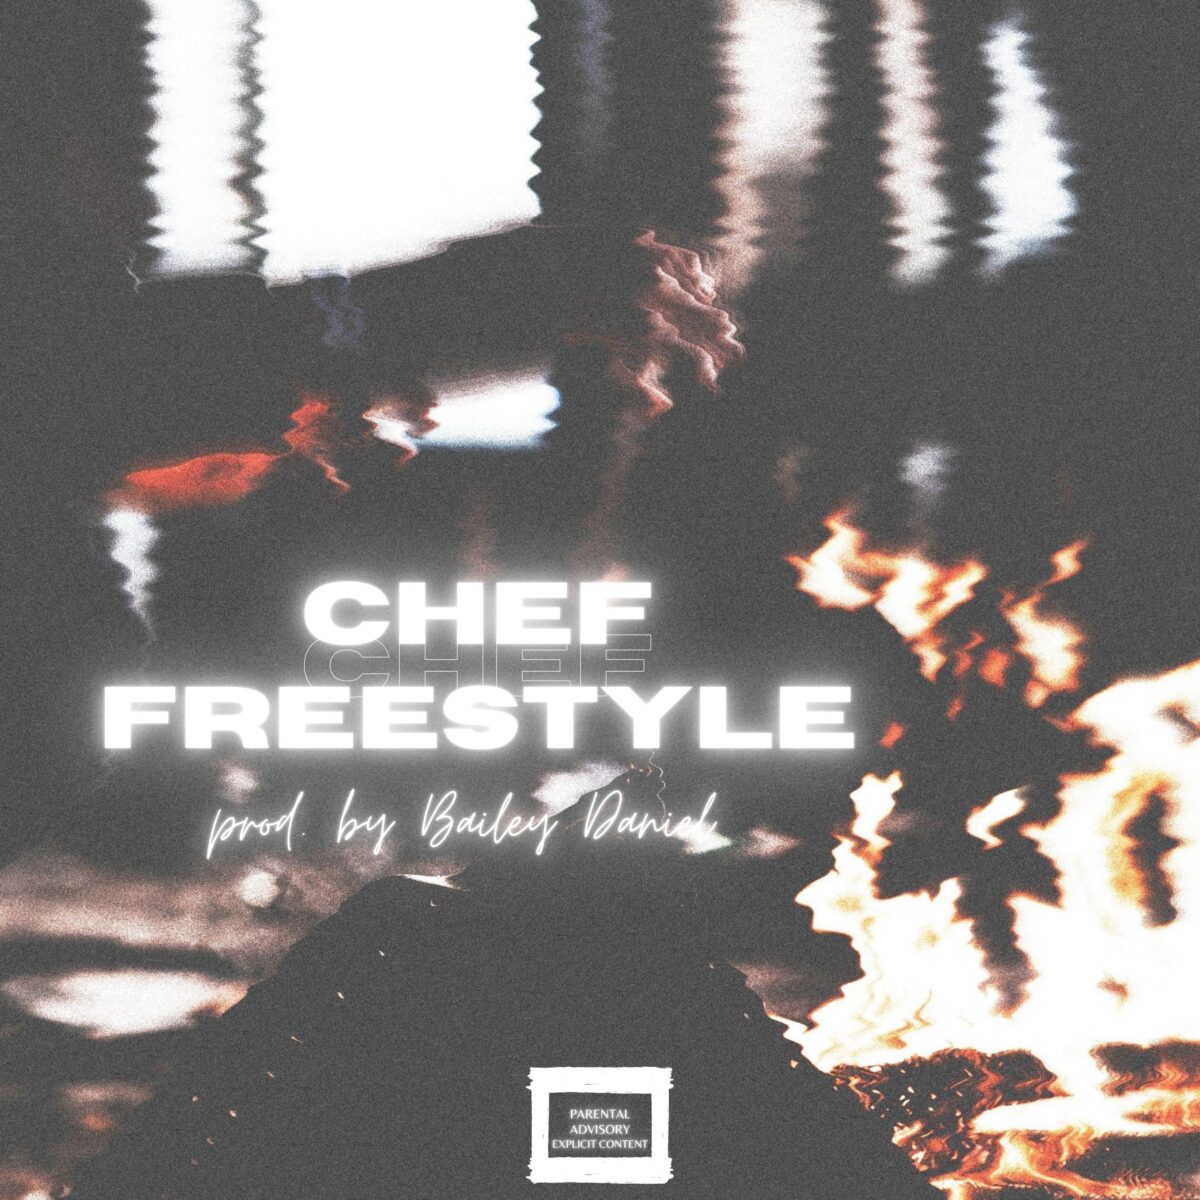 Chef Chef Freestyle